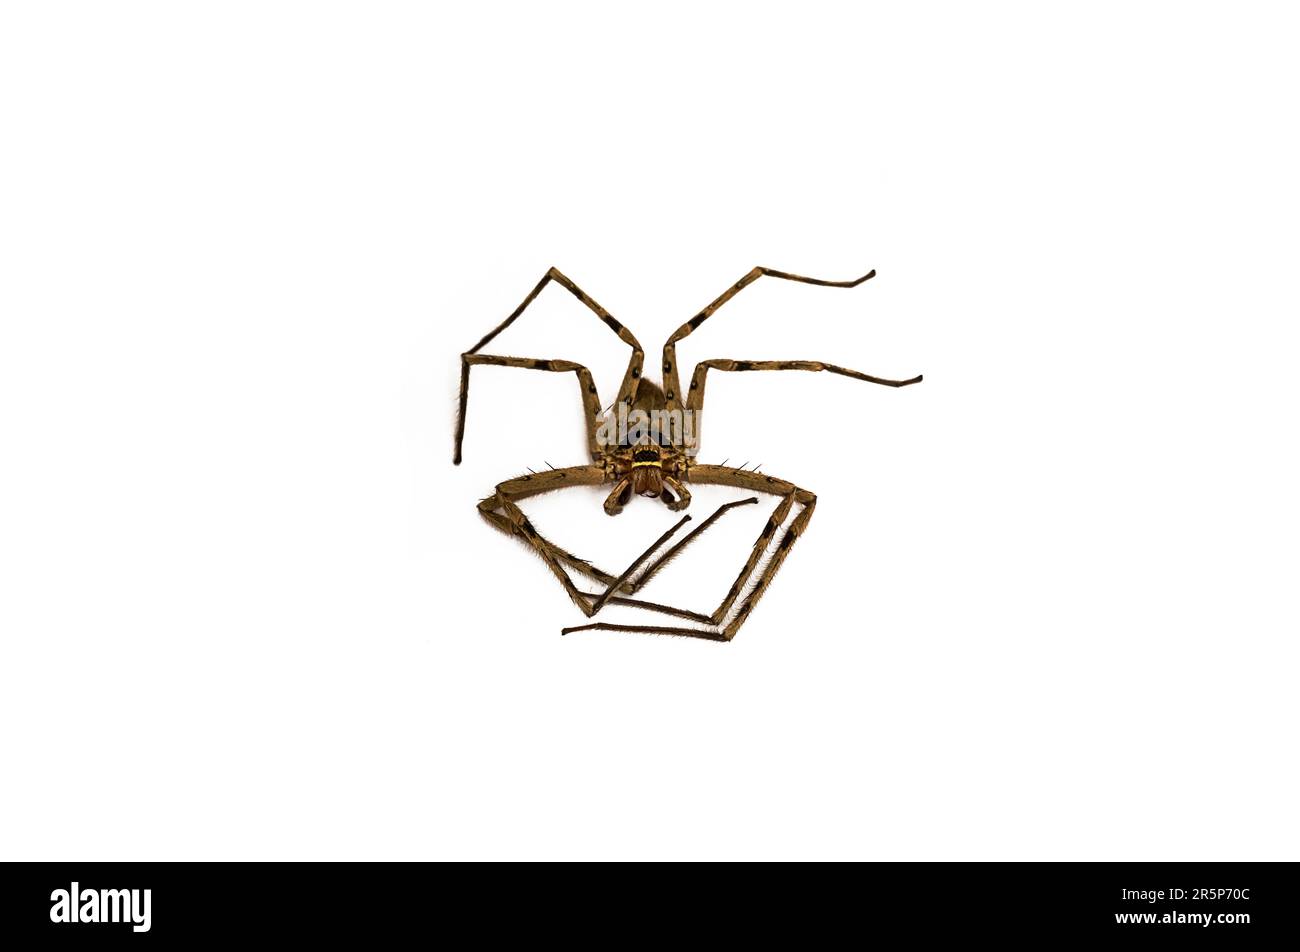 Died heteropoda venatoria huntsman spider on white. Stock Photo